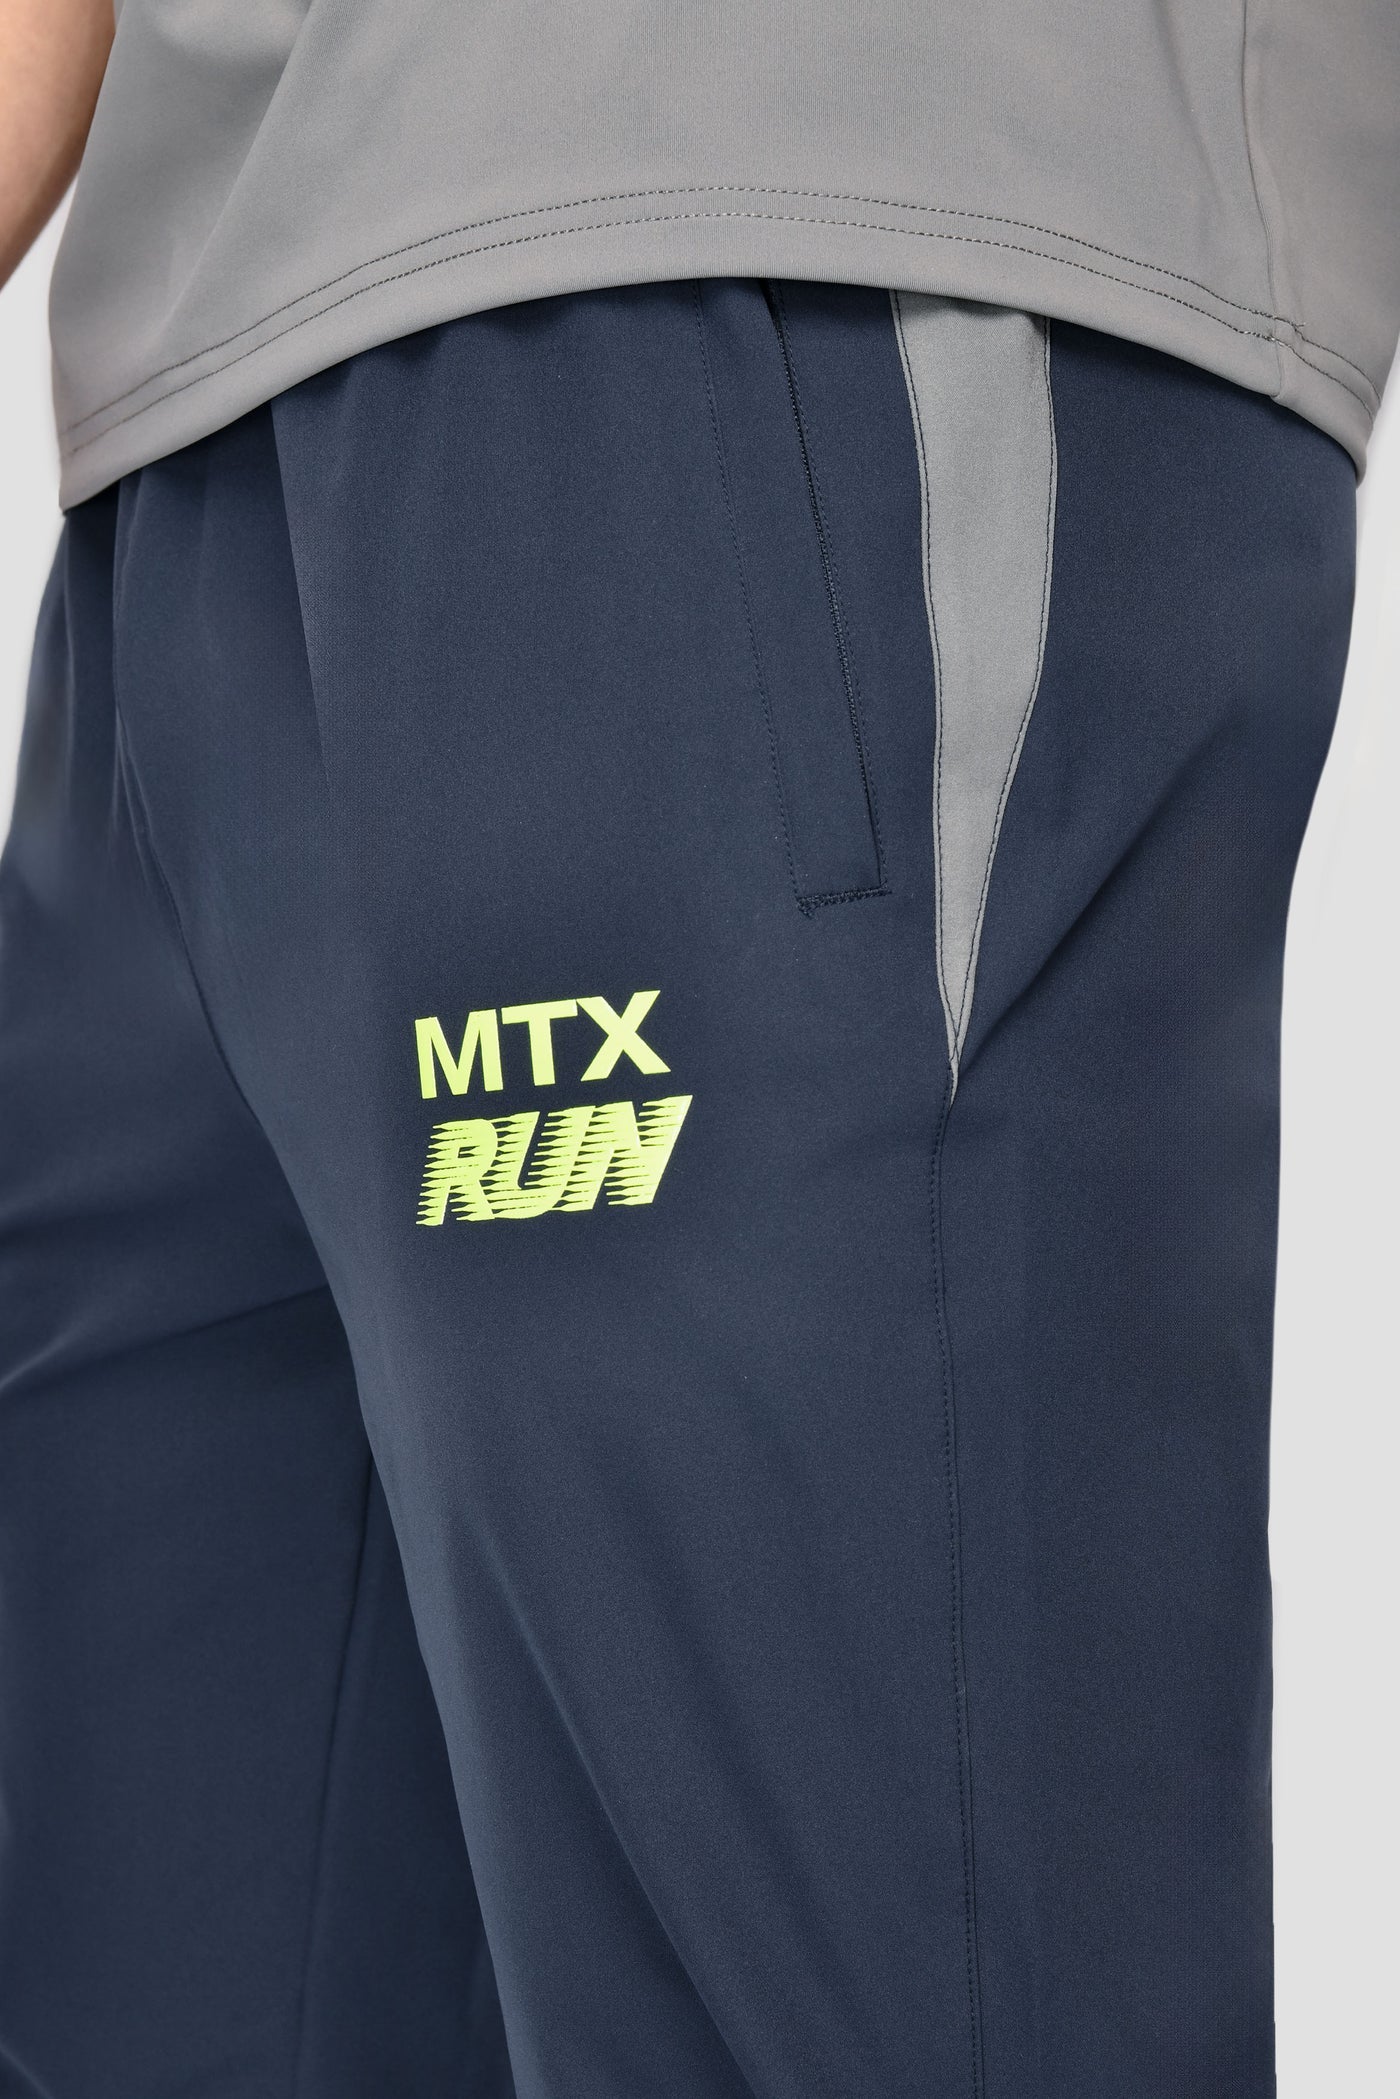 MONTIREX MTX RUN RUNNING PANTS - MIDNIGHT BLUE/CEMENT GREY/LIME